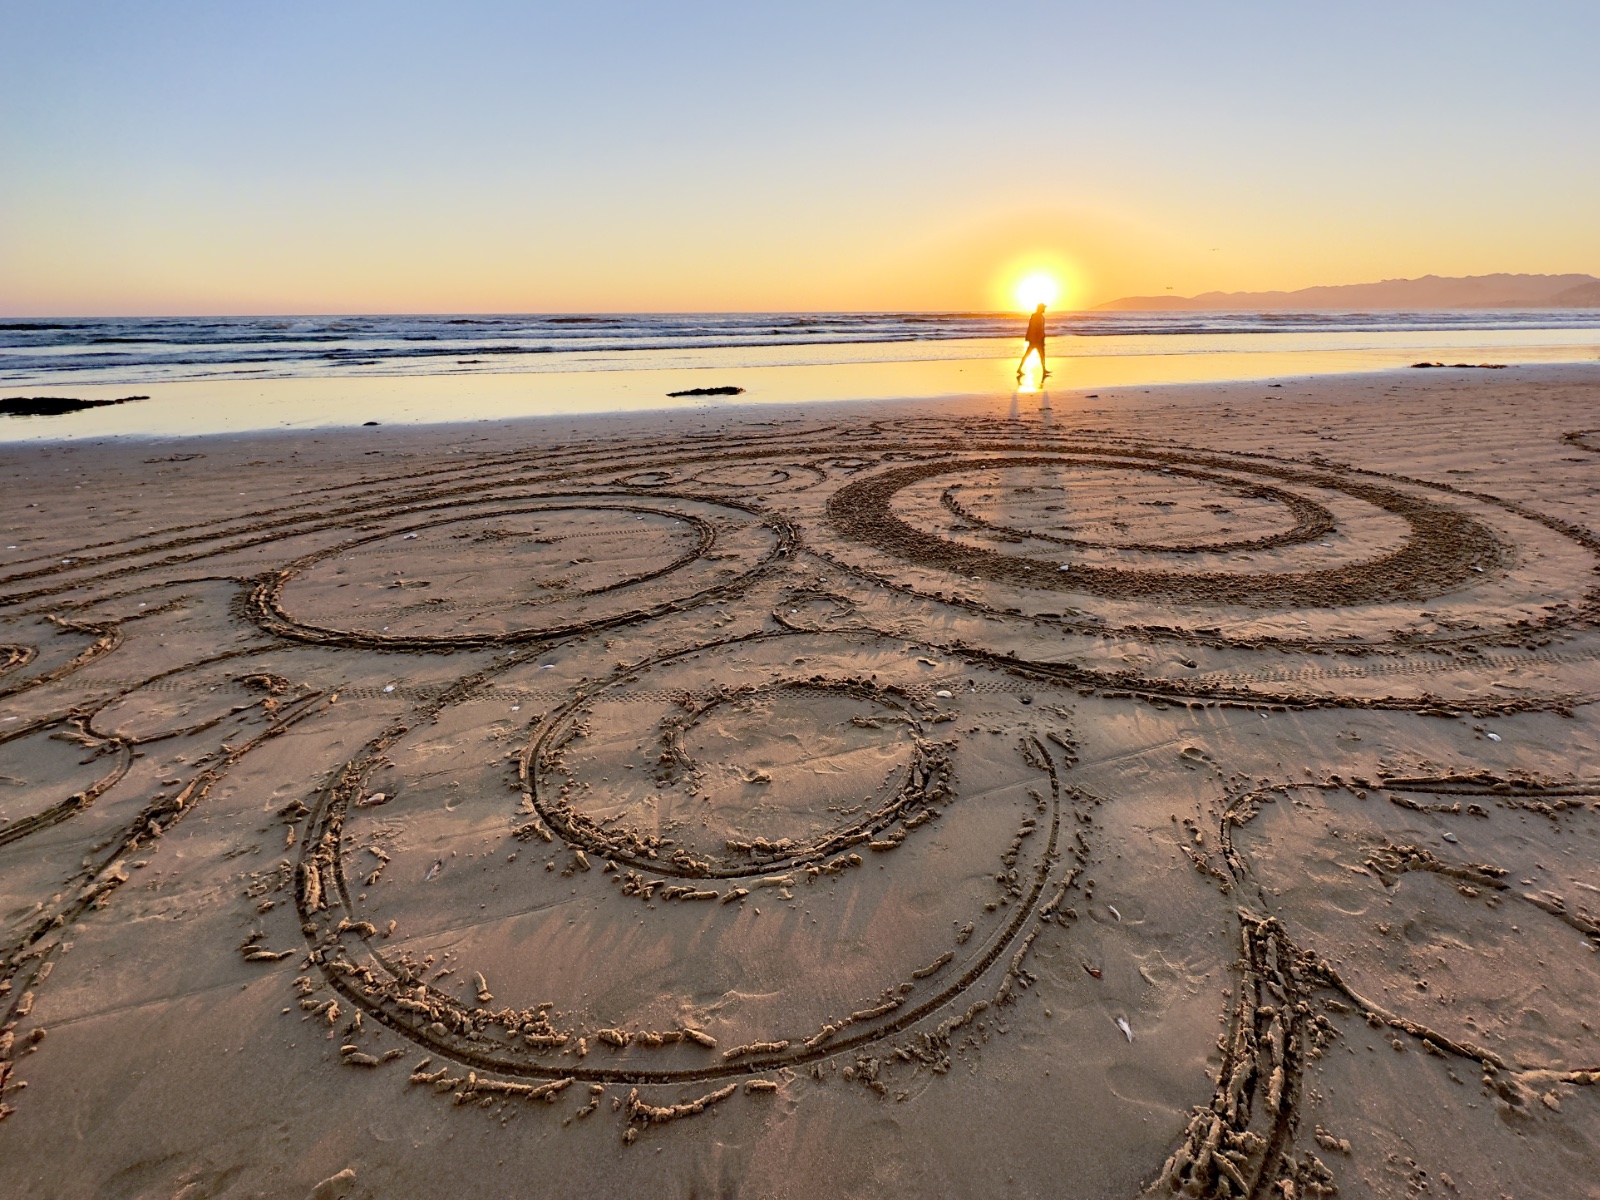 Sand swirls and beach walker at sunset.